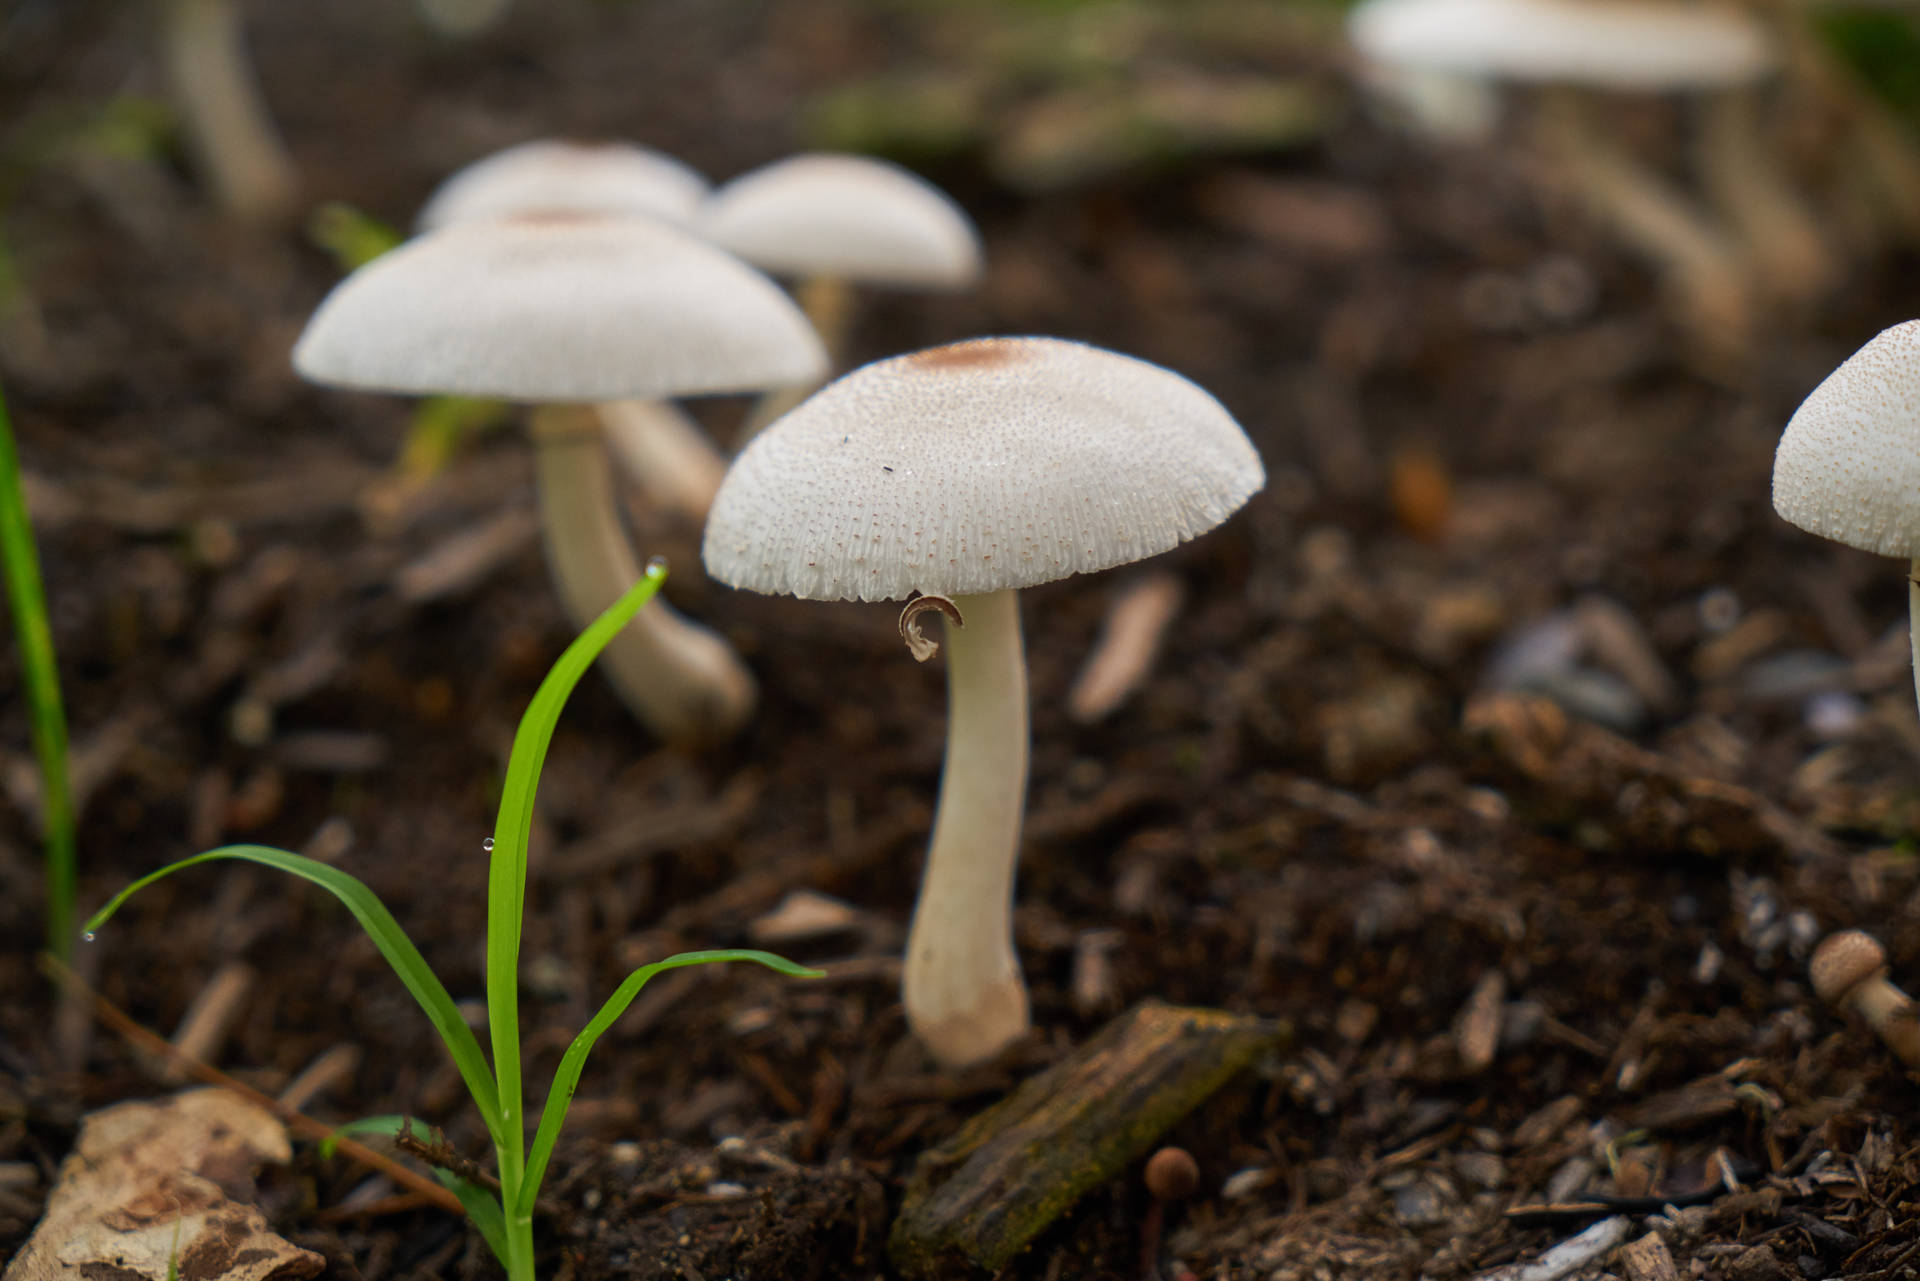 Cute White Mushrooms Growing On Soil